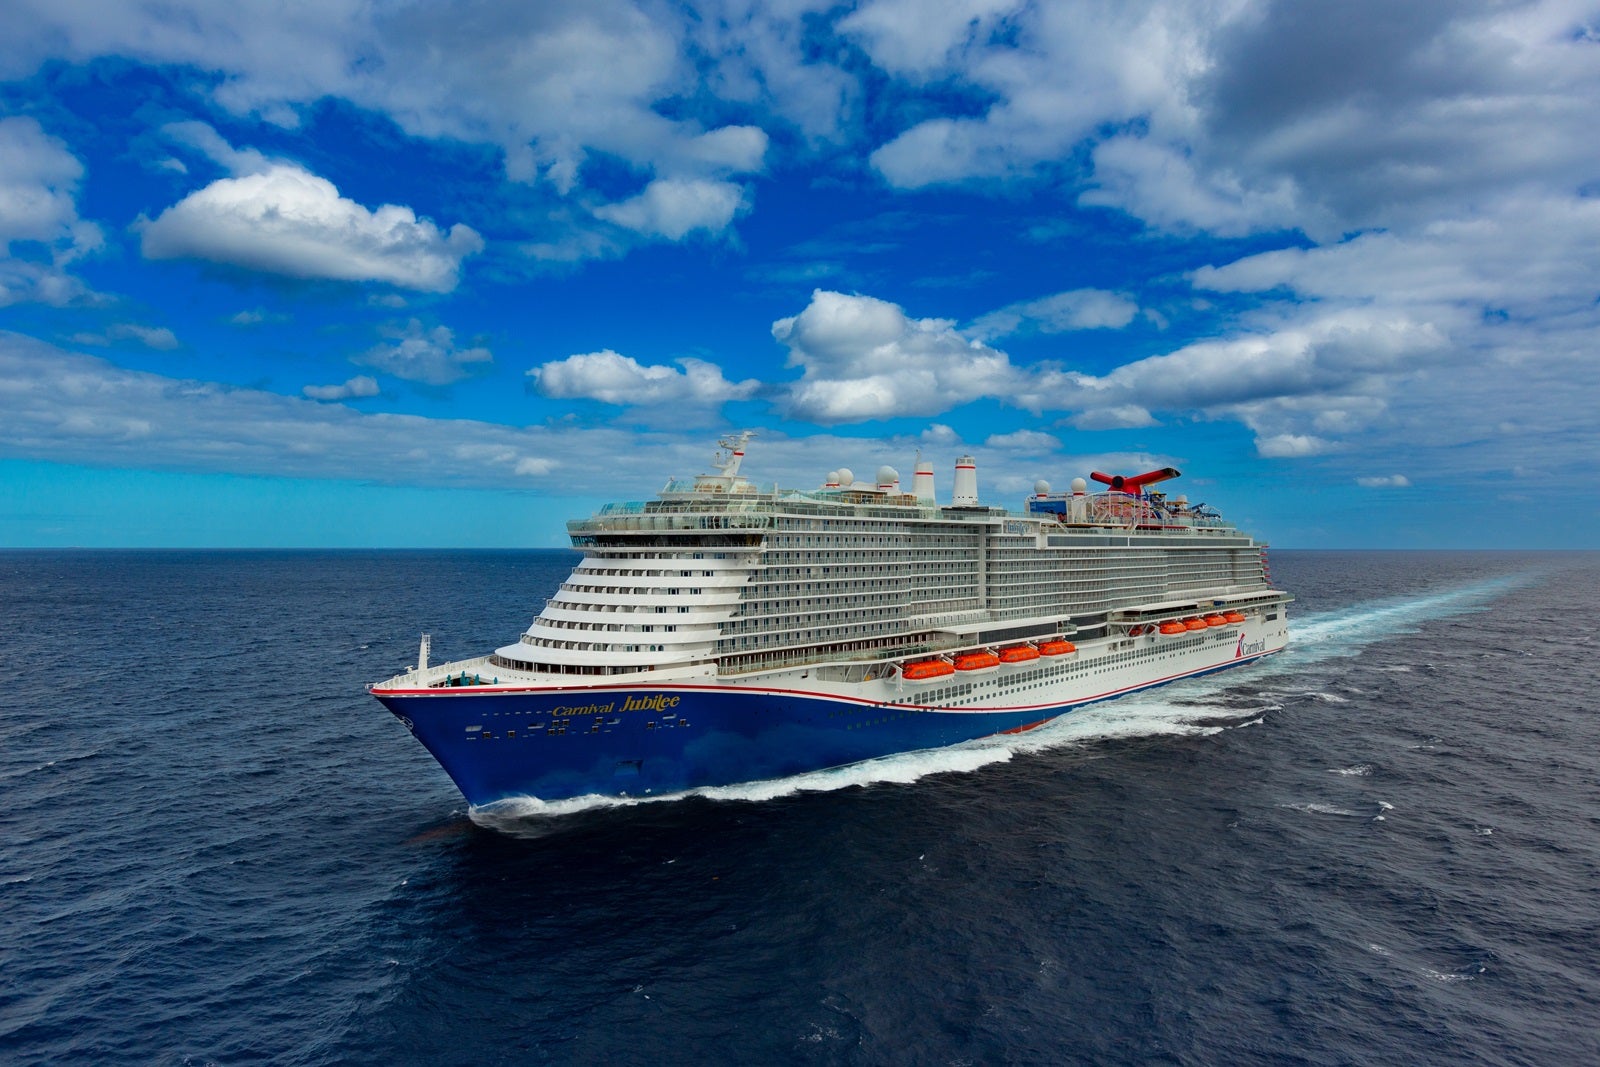 Even bigger! Cruise giant Carnival orders 3 massive new ships